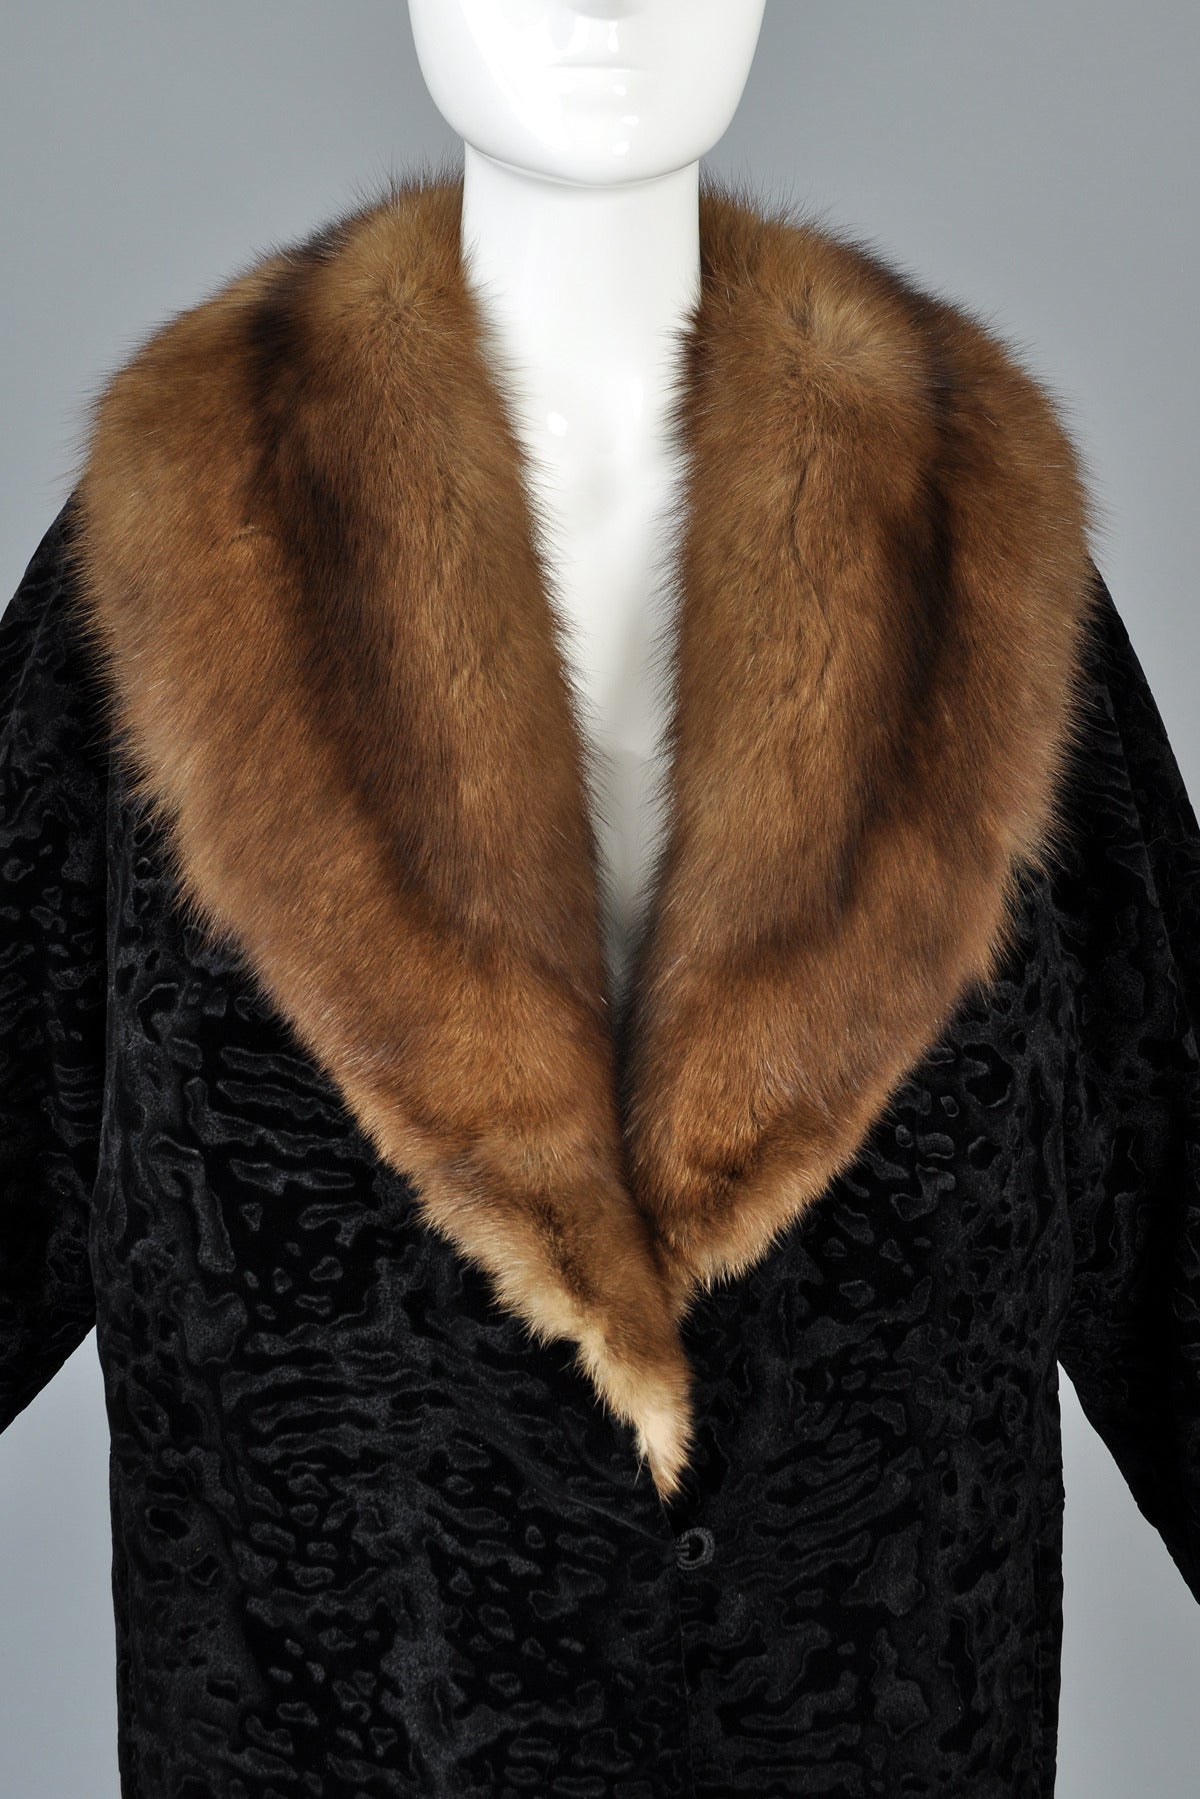 Women's Bill Blass Broadtail Printed Velvet Jacket with Sable Collar